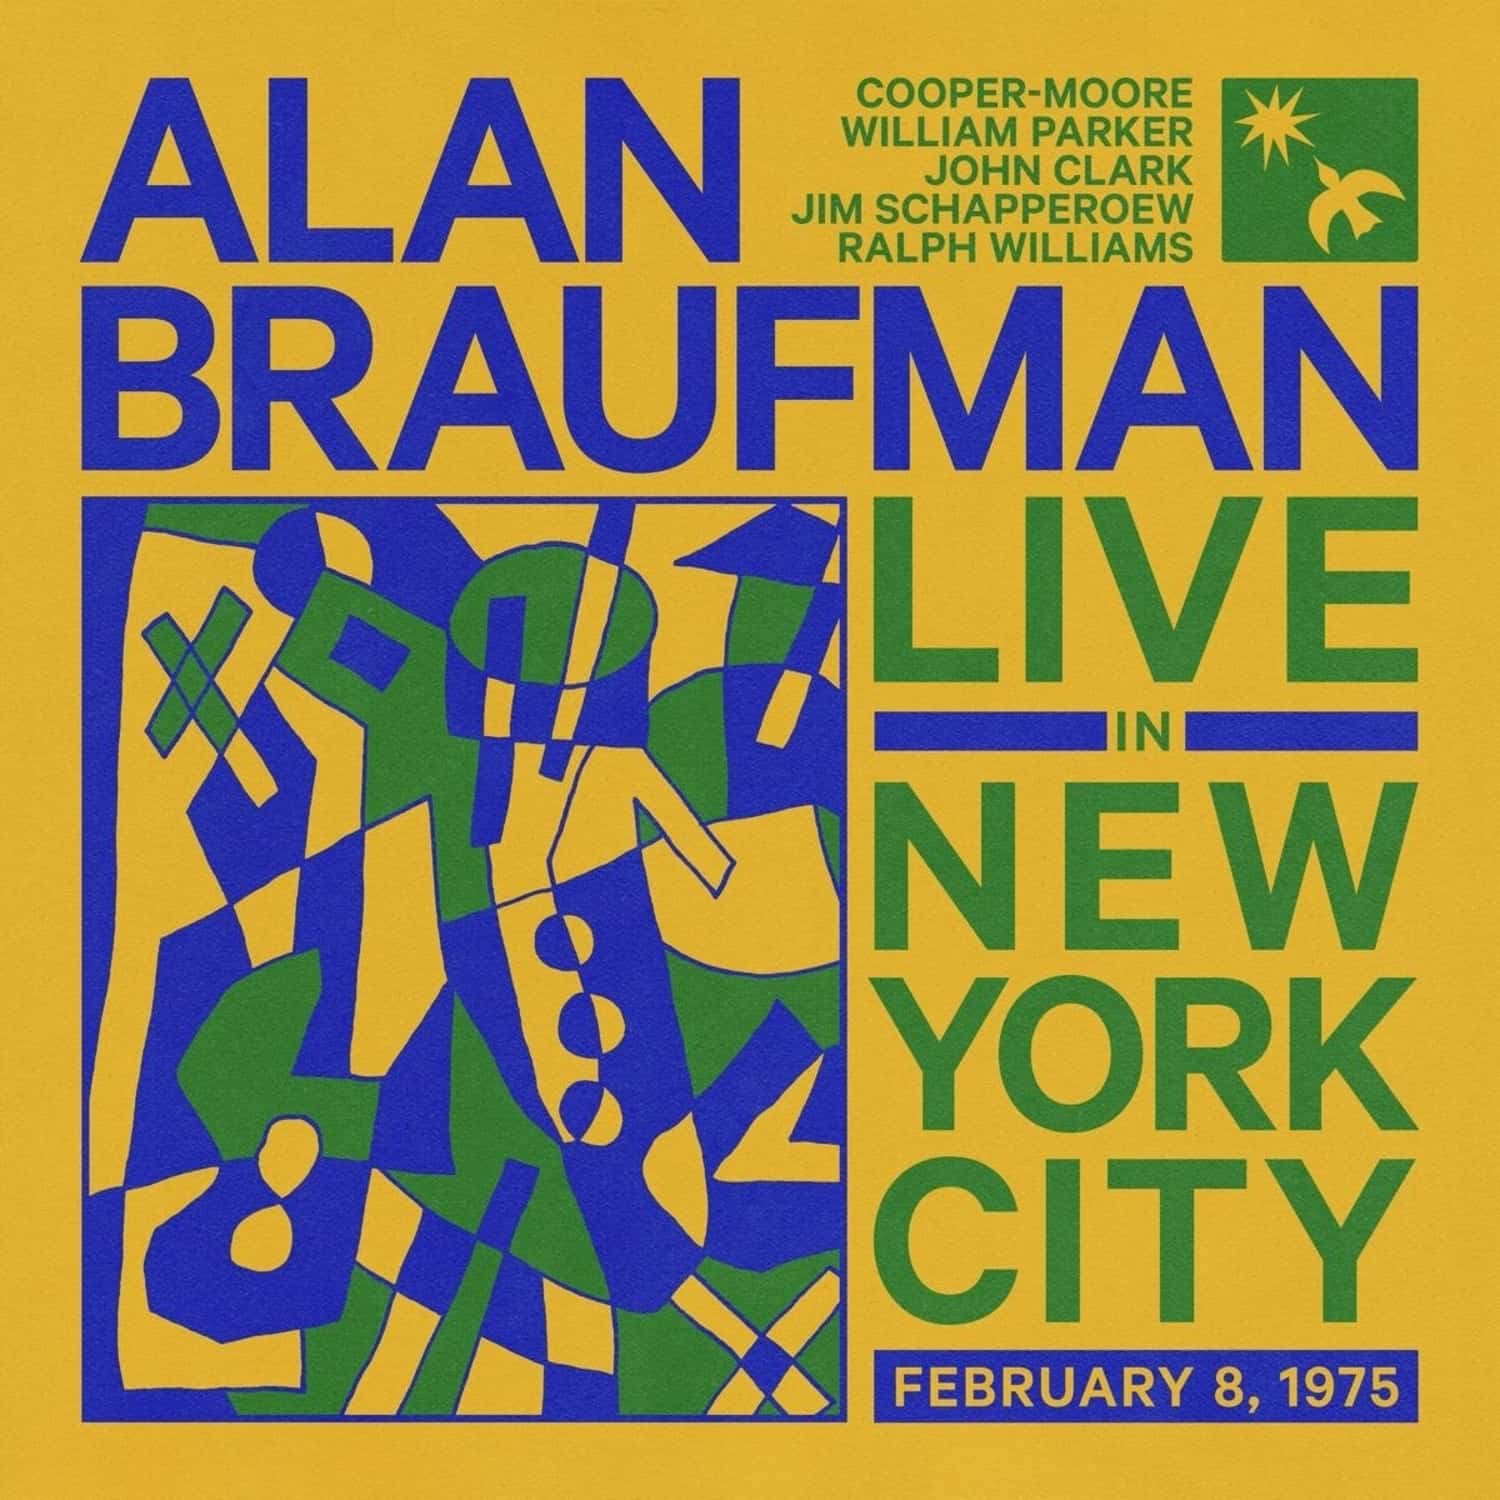 Alan Braufman - LIVE IN NEW YORK CITY, FEBRUARY 8, 1975 